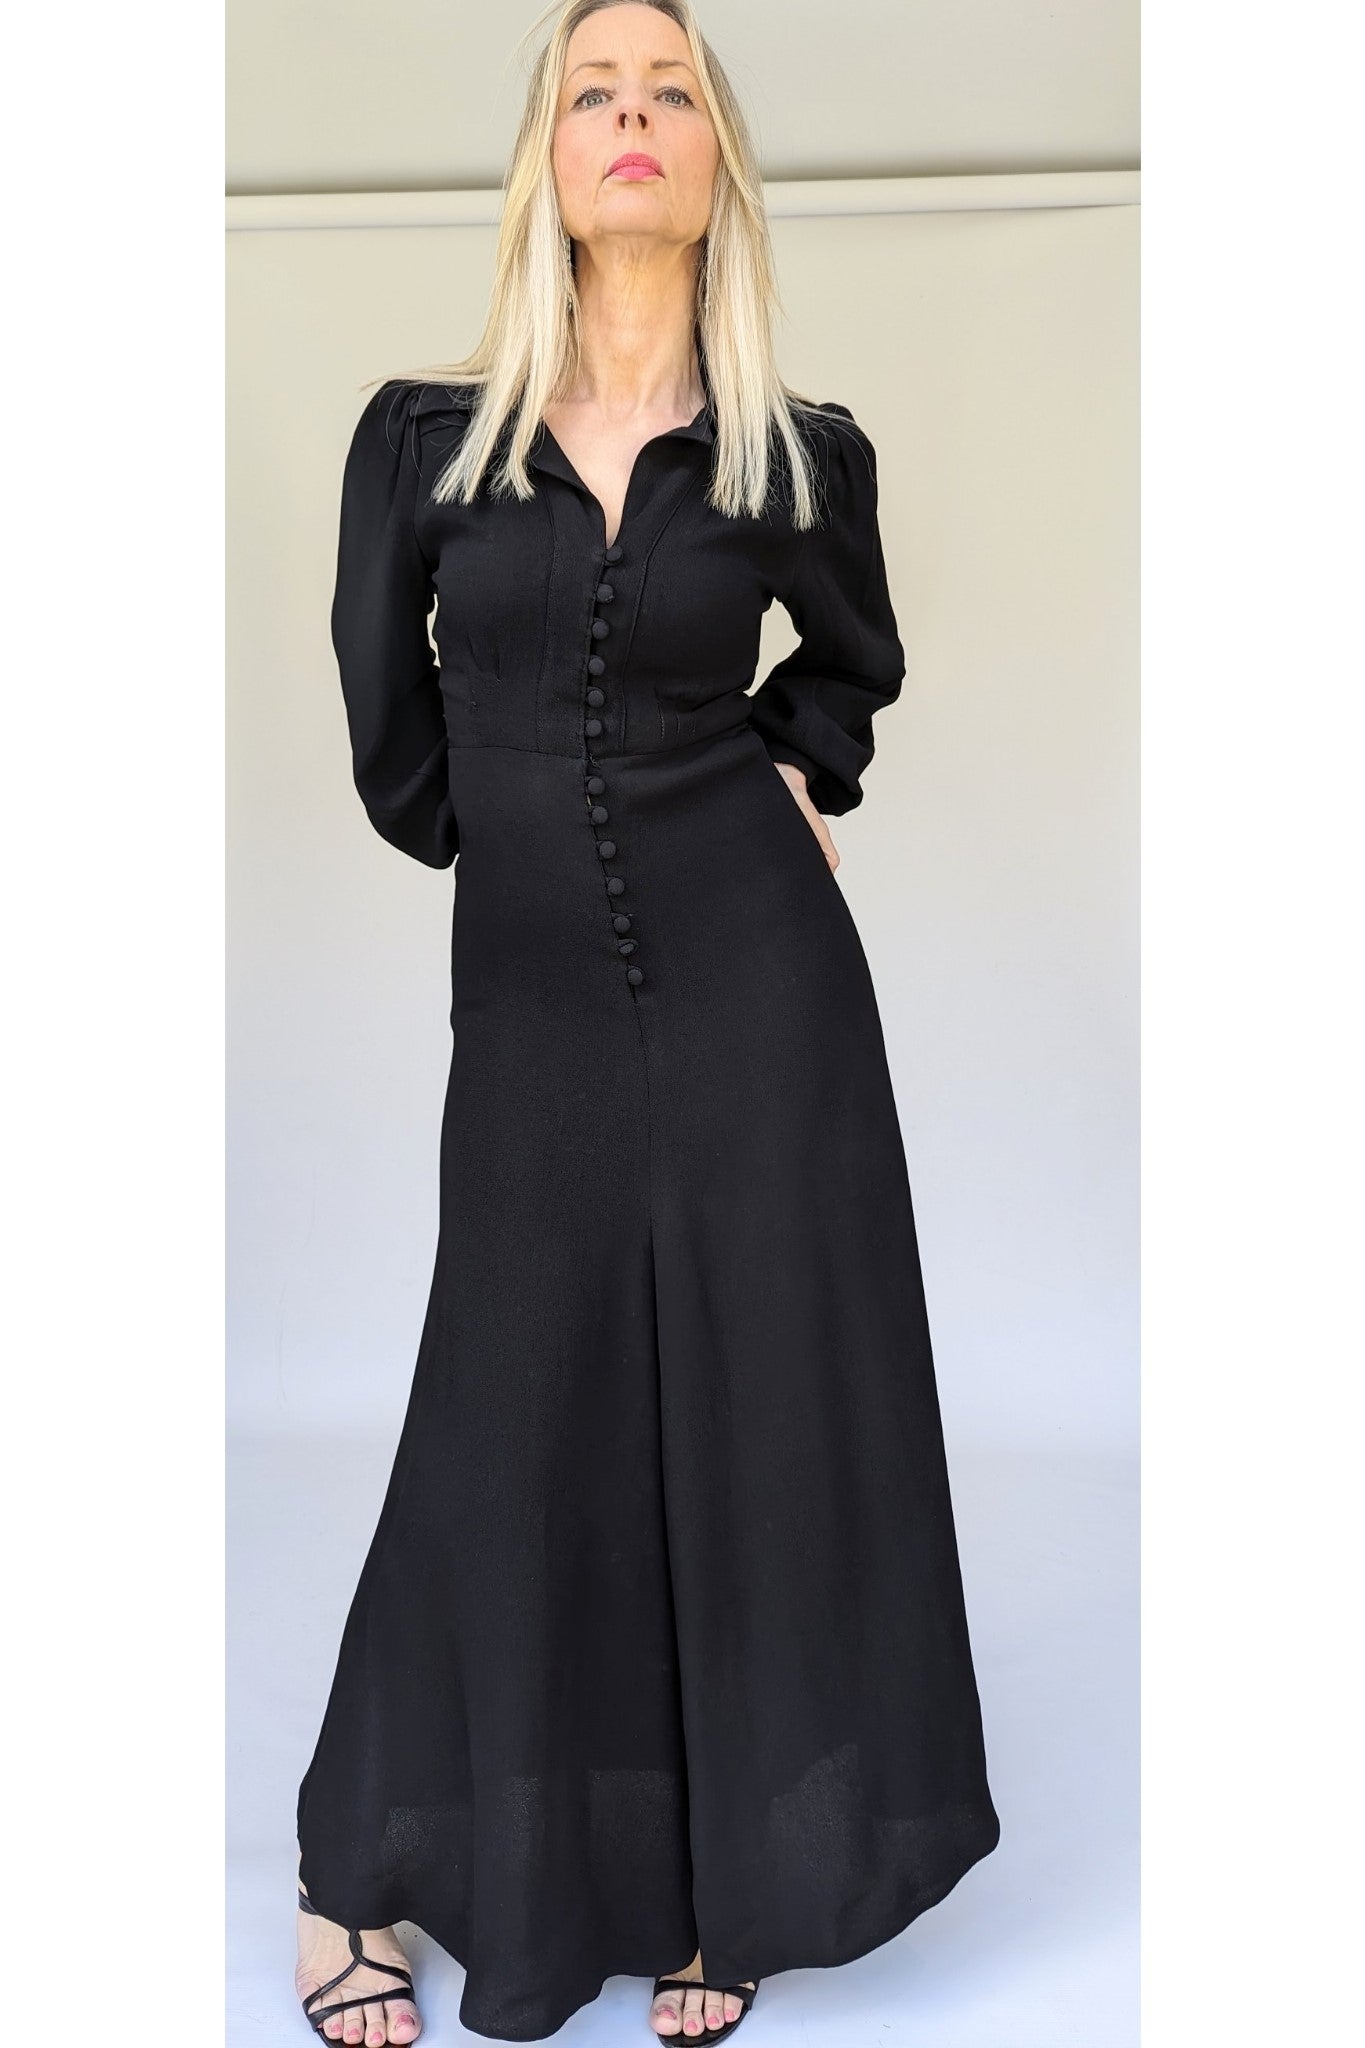 Ossie Clark for Radley black crepe maxi dress